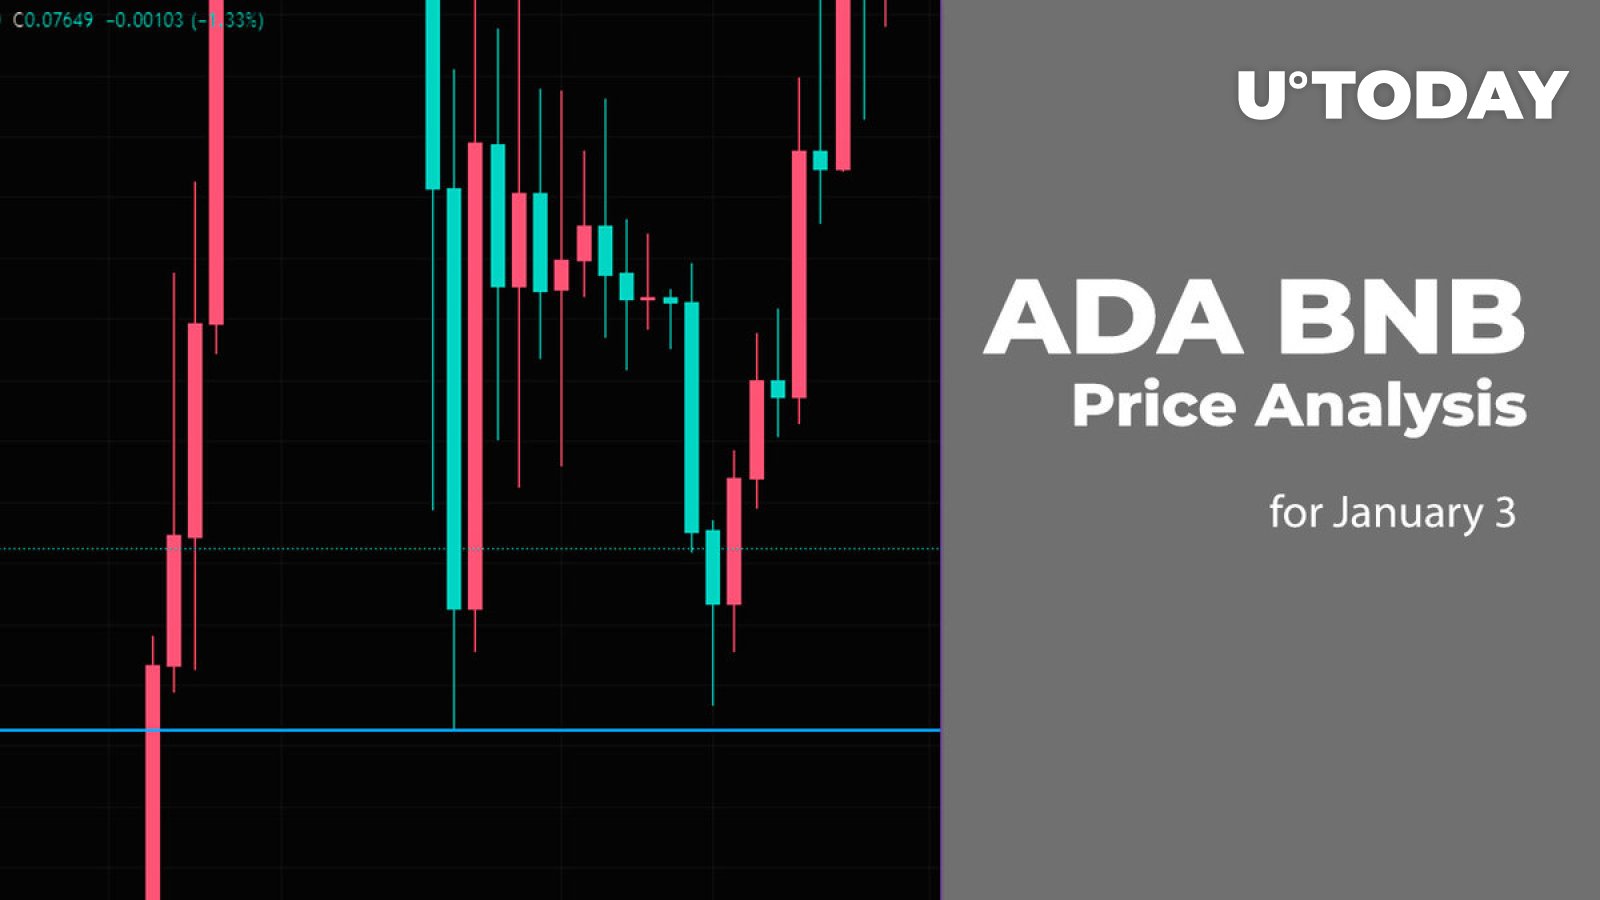 ADA and BNB Price Analysis for January 3